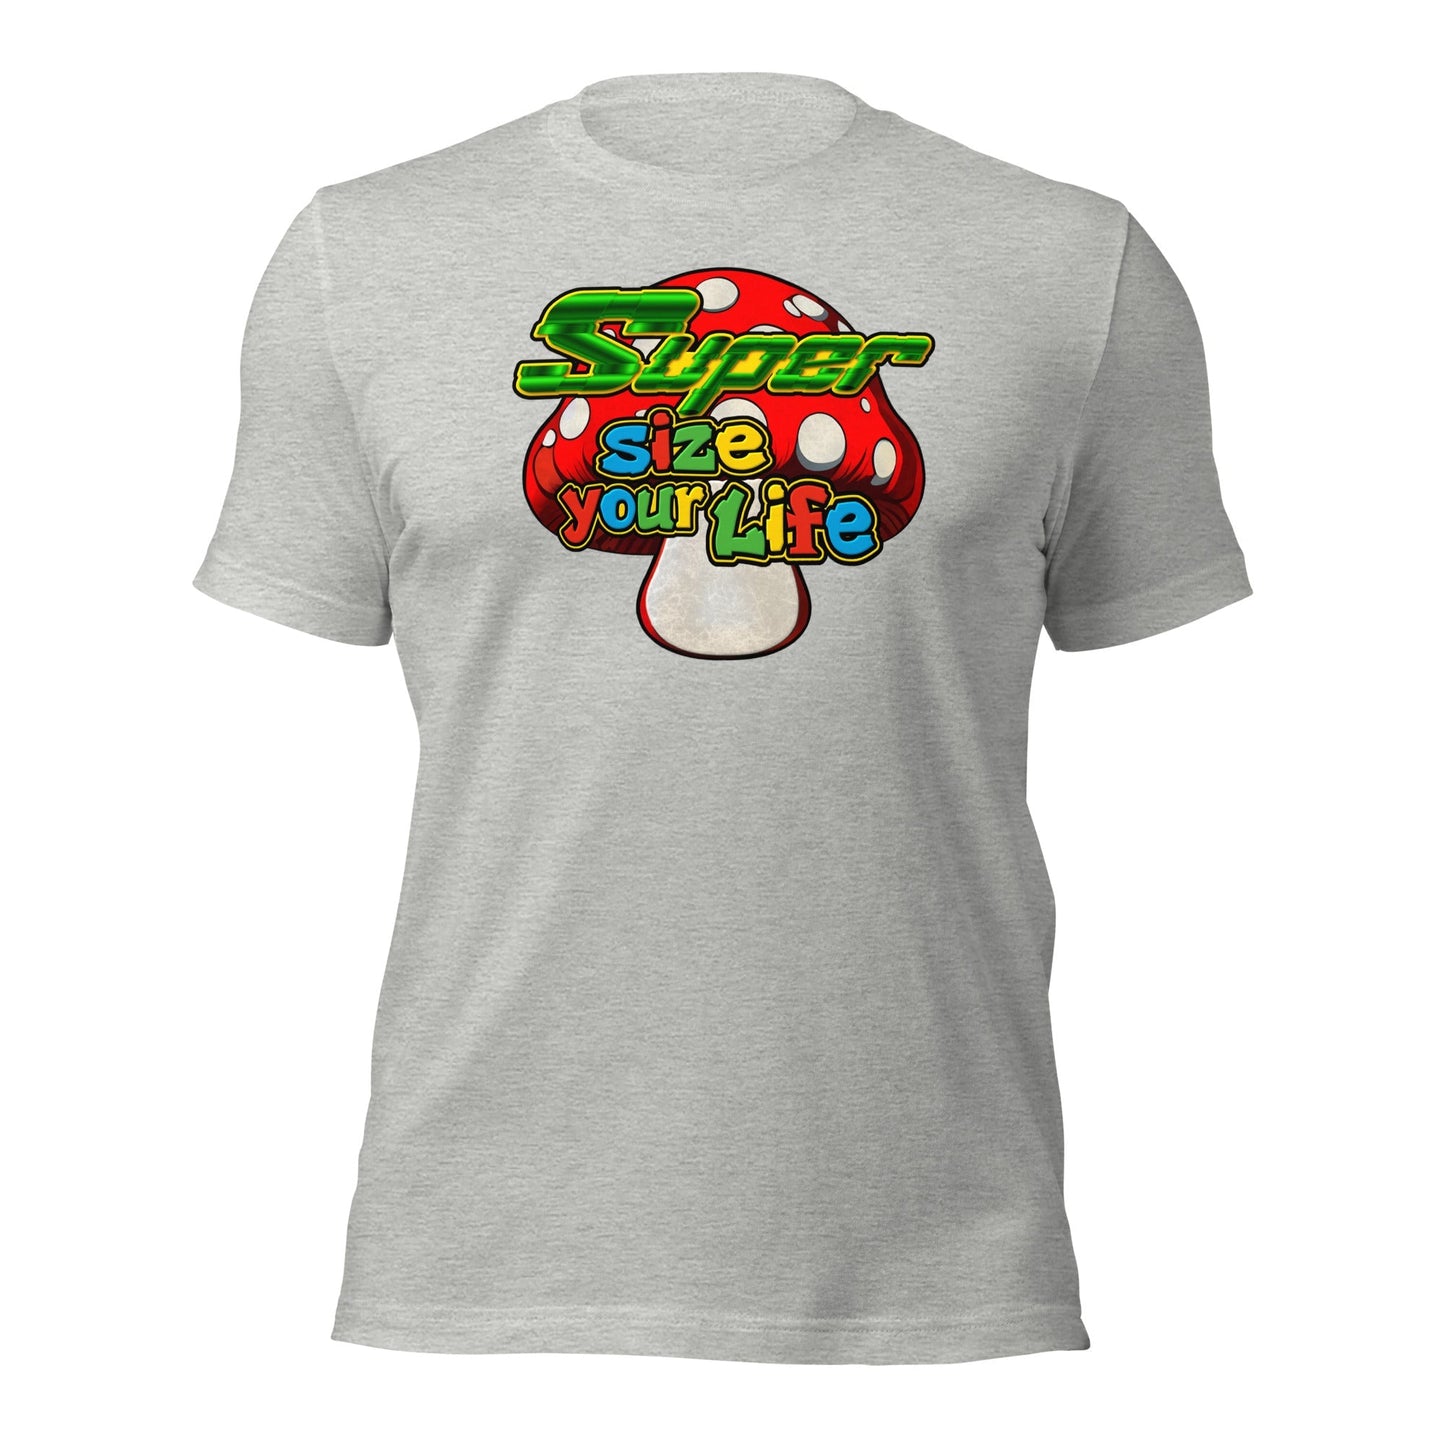 Athletic Heather / S Mushroom T-Shirt Super Size Your Life Unisex Gamer Tee Short Sleeve ArcZeal Designs